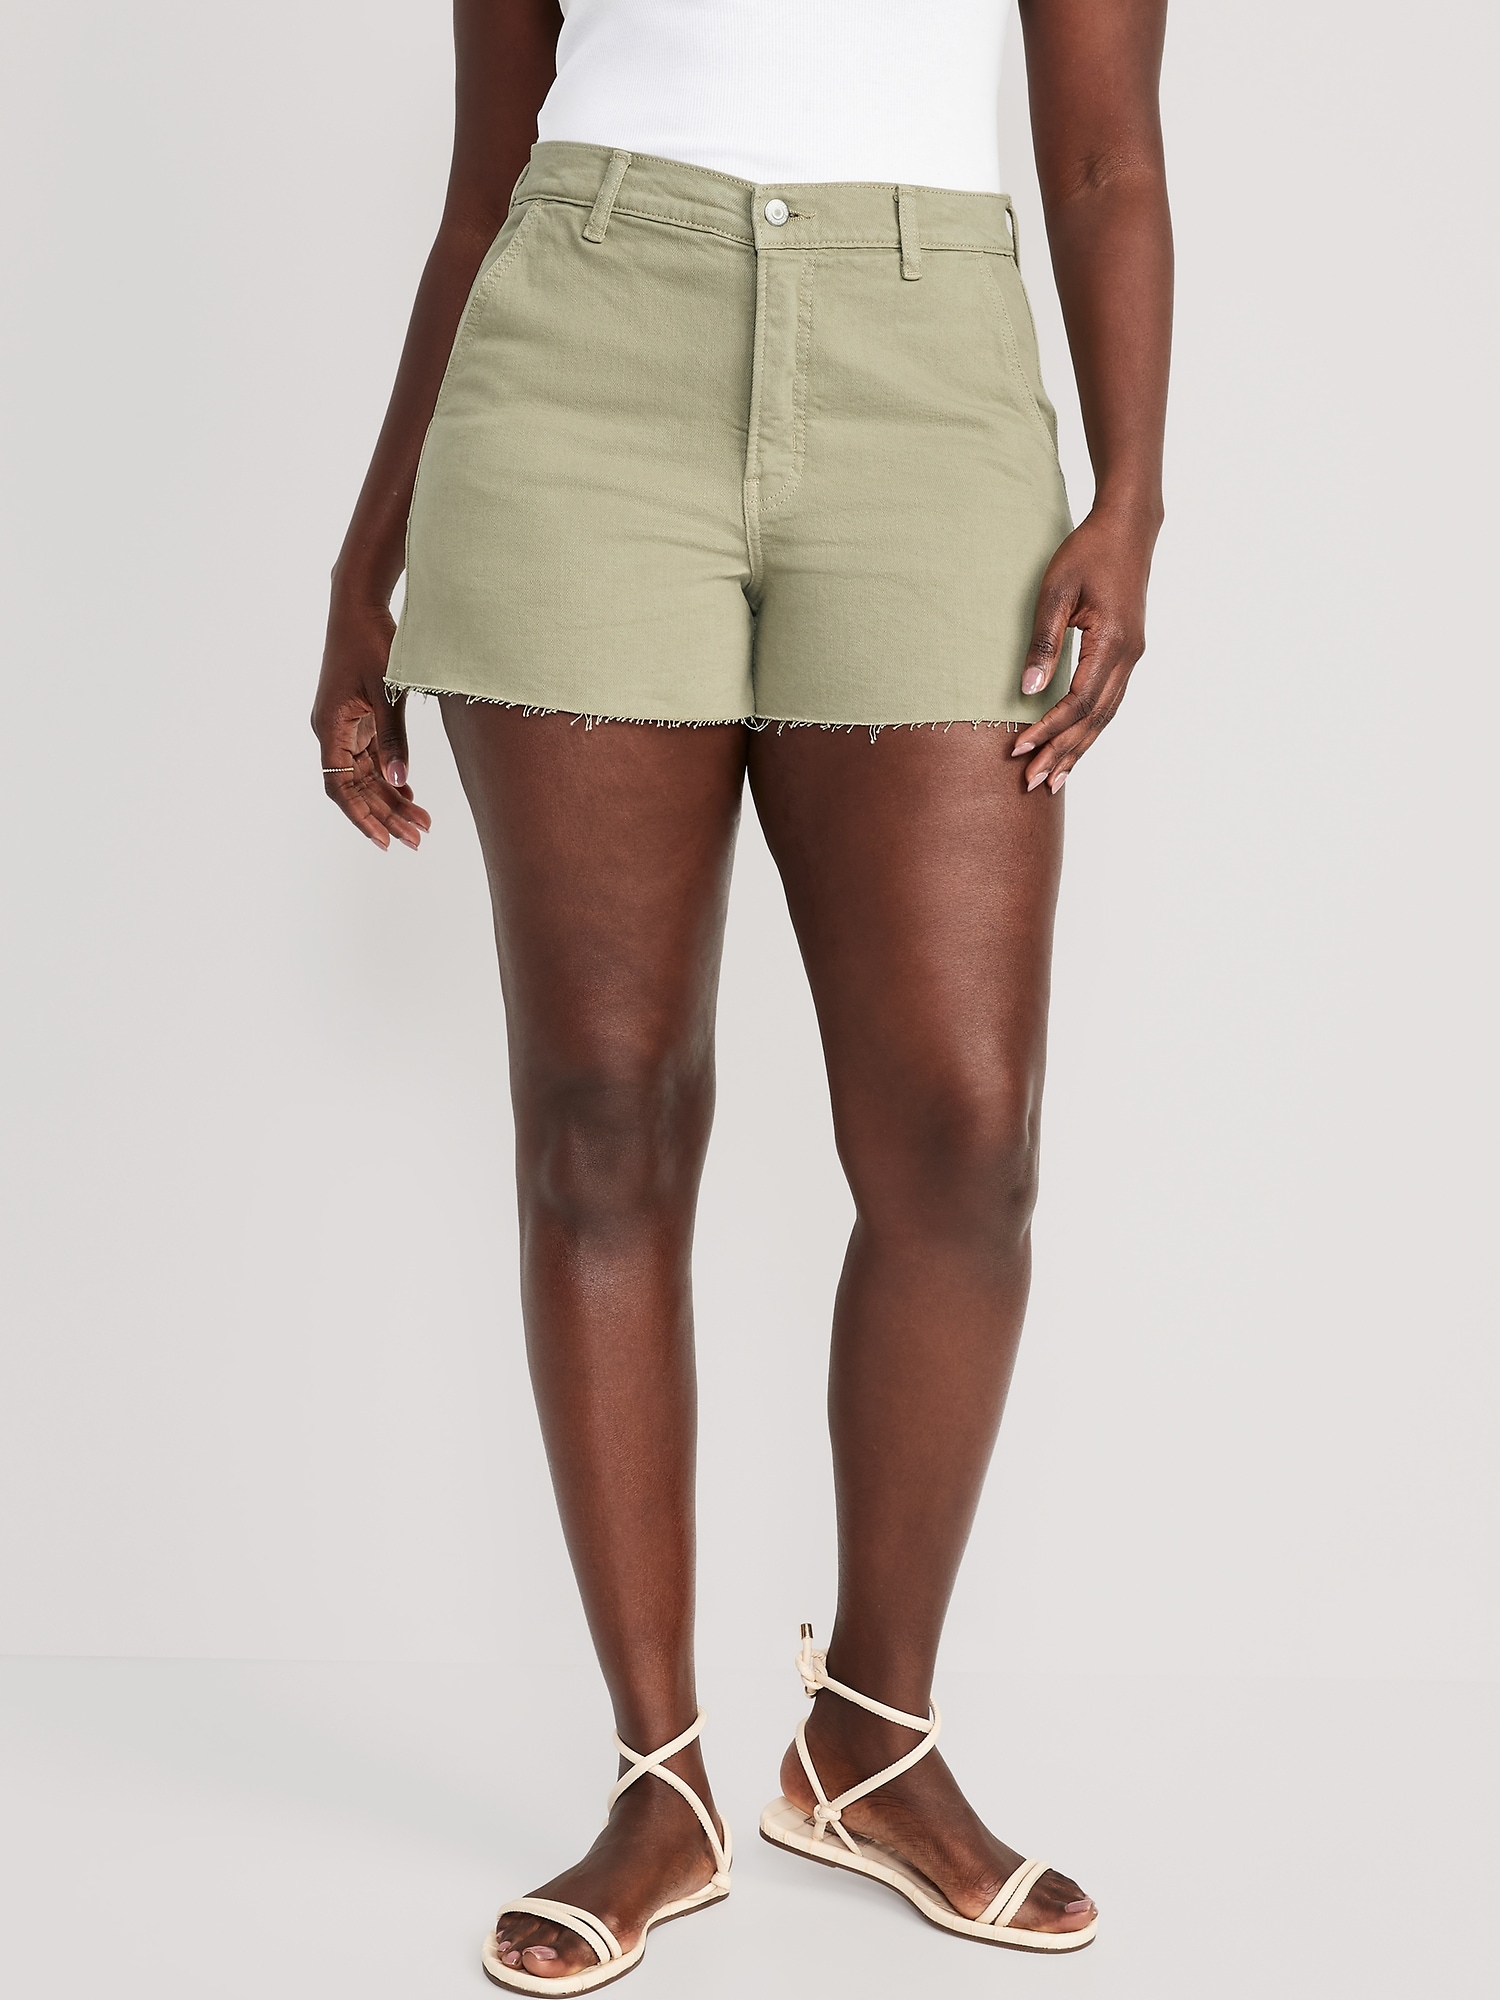 Women's High Waisted Denim Shorts Straight Leg Jean Shorts Fashion Bermuda  Shorts Raw Hem Summer Hot Pants with Pockets